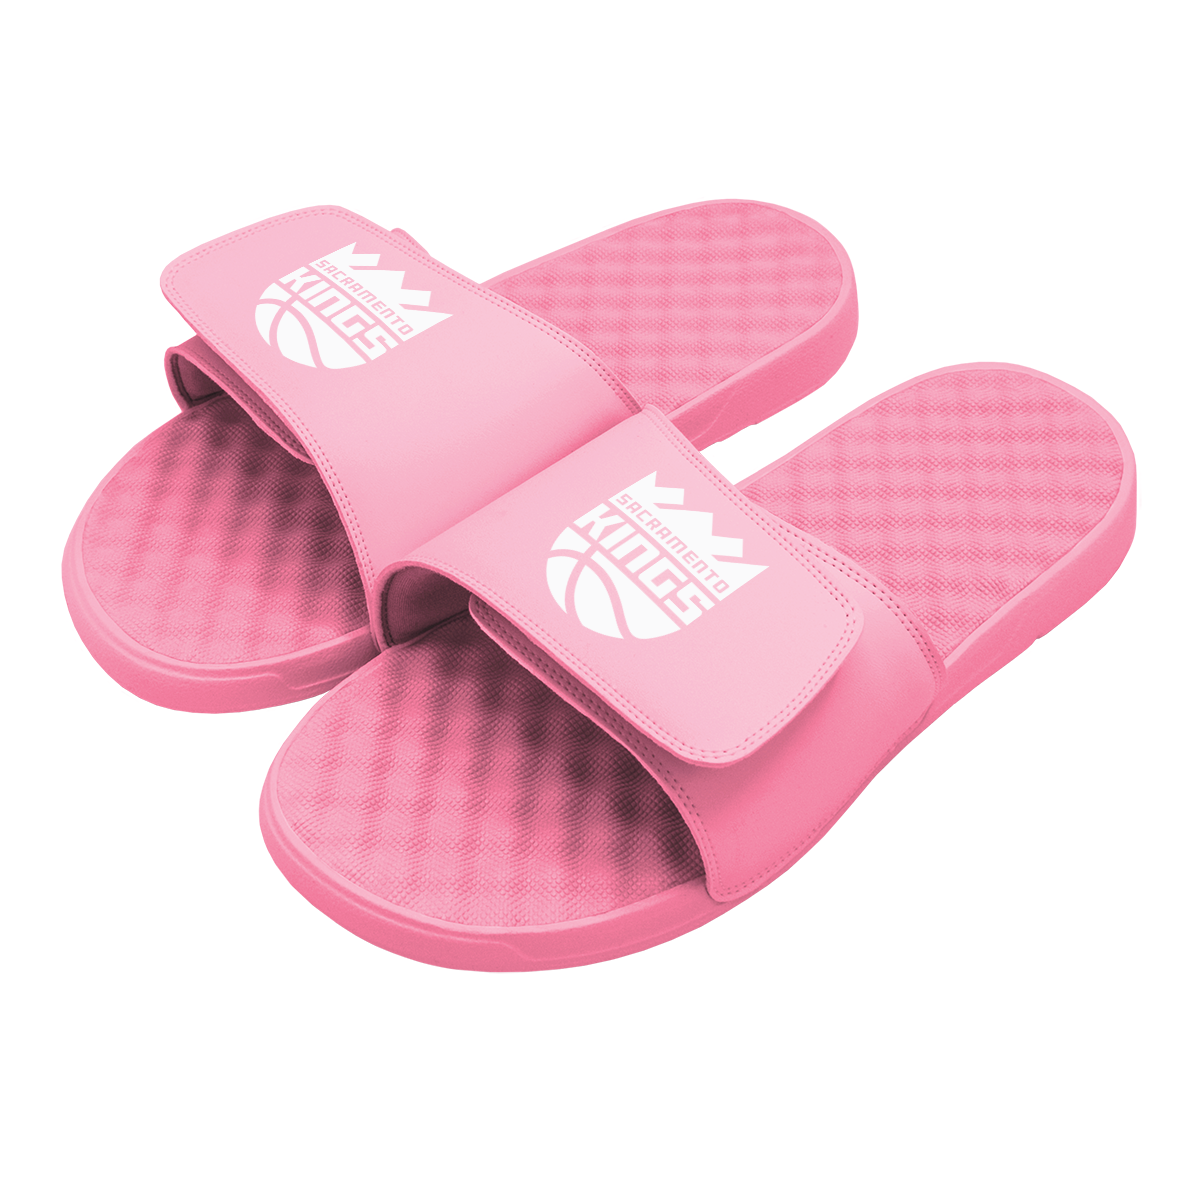 Sacramento Kings Primary Pink Slides